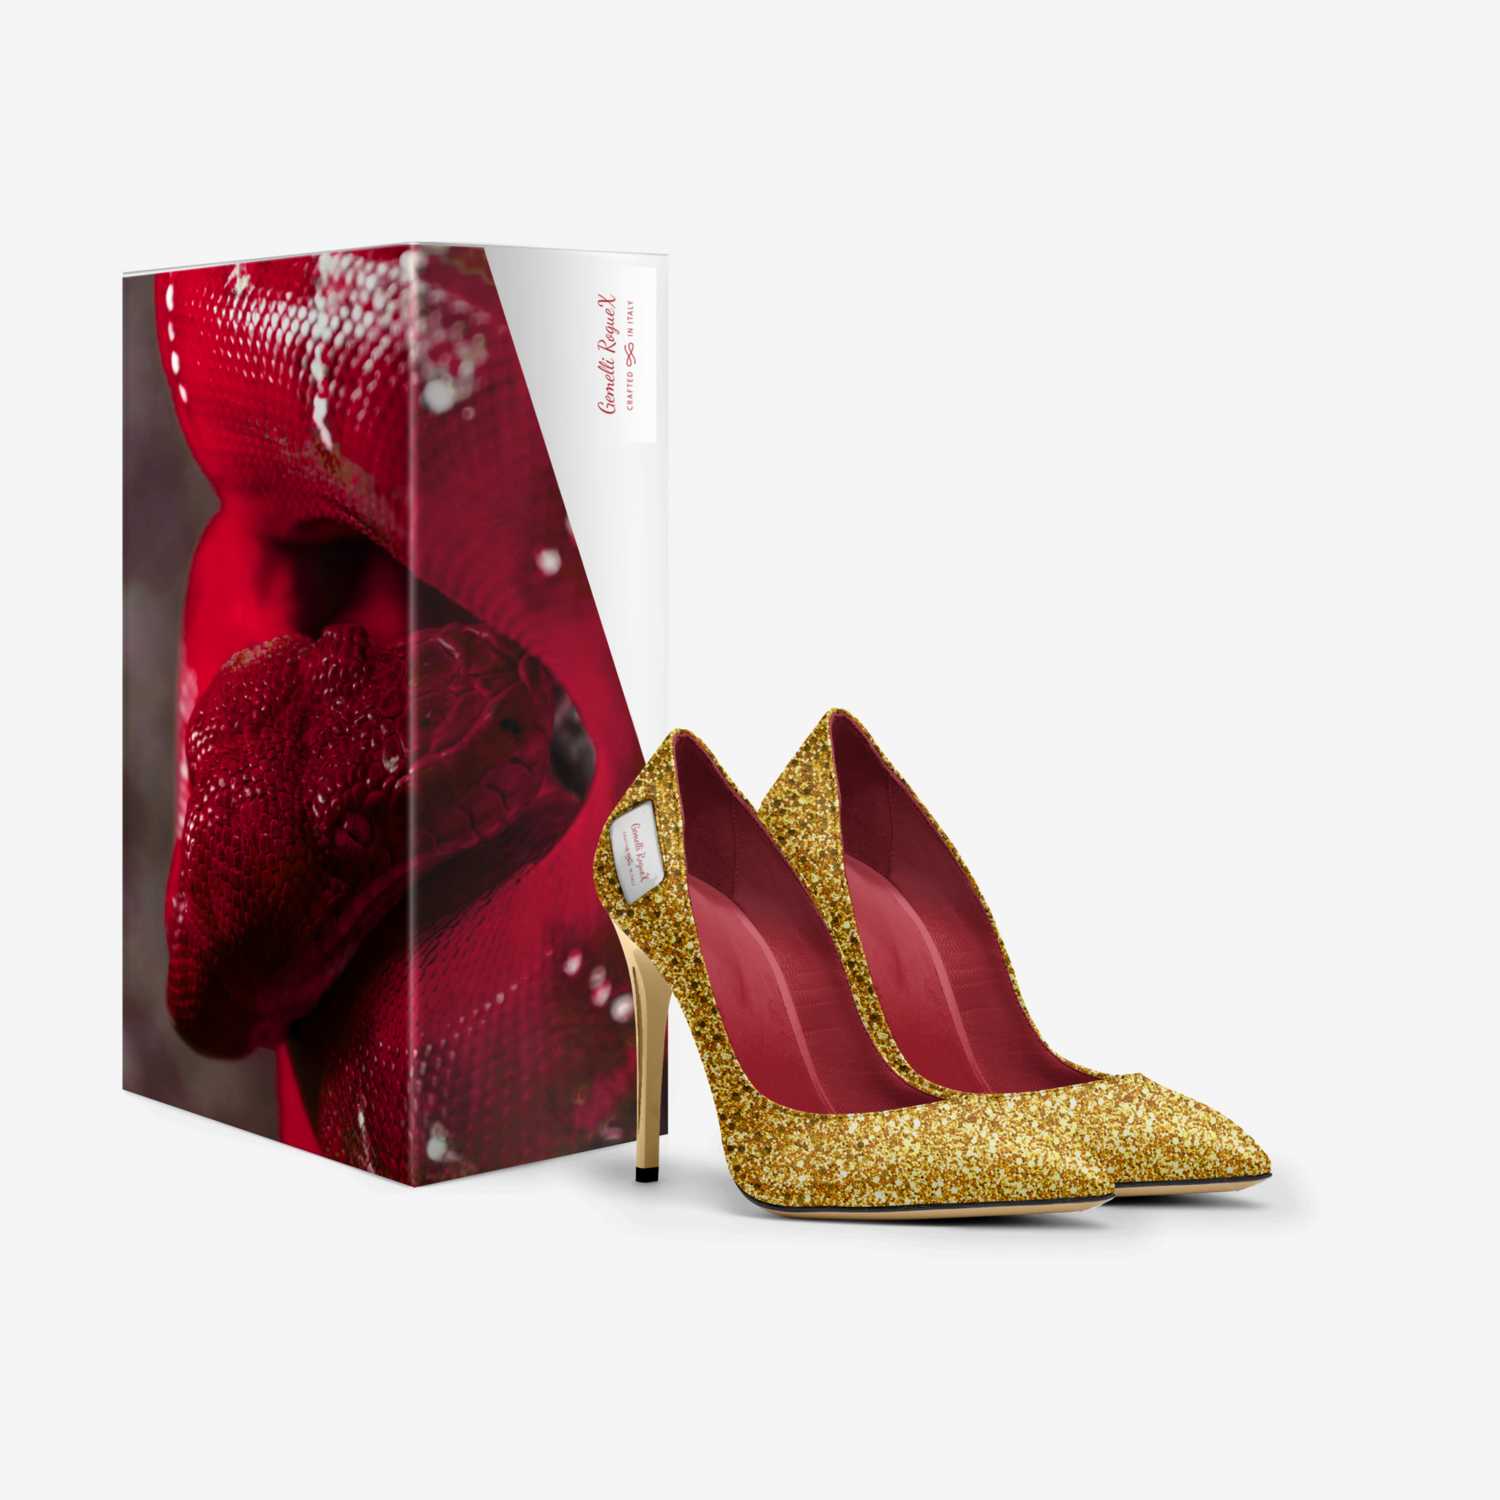 GEMELLI ROGUEx | A Custom Shoe concept by Beatrixz Tmx